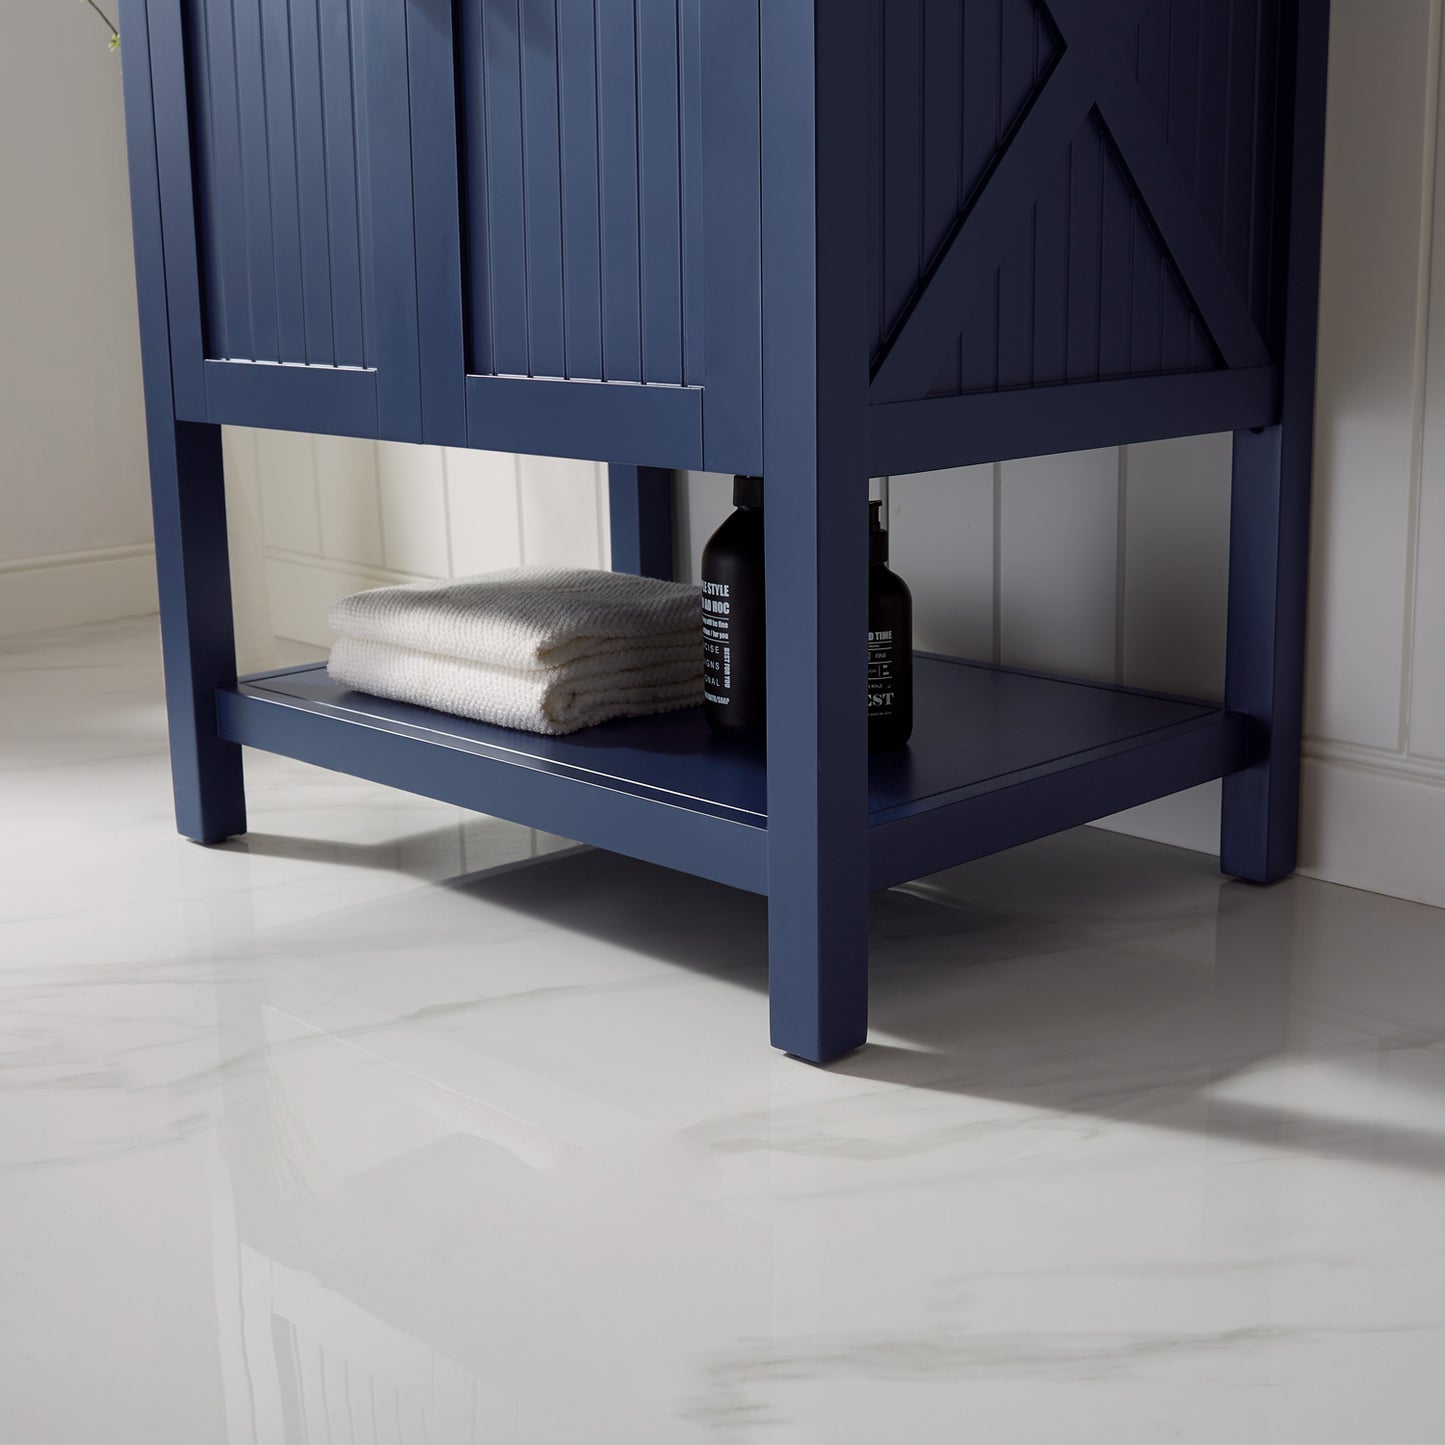 Vinnova Modena 28” Vanity in Royal Blue with Glass Countertop with White Vessel Sink - Luxe Bathroom Vanities